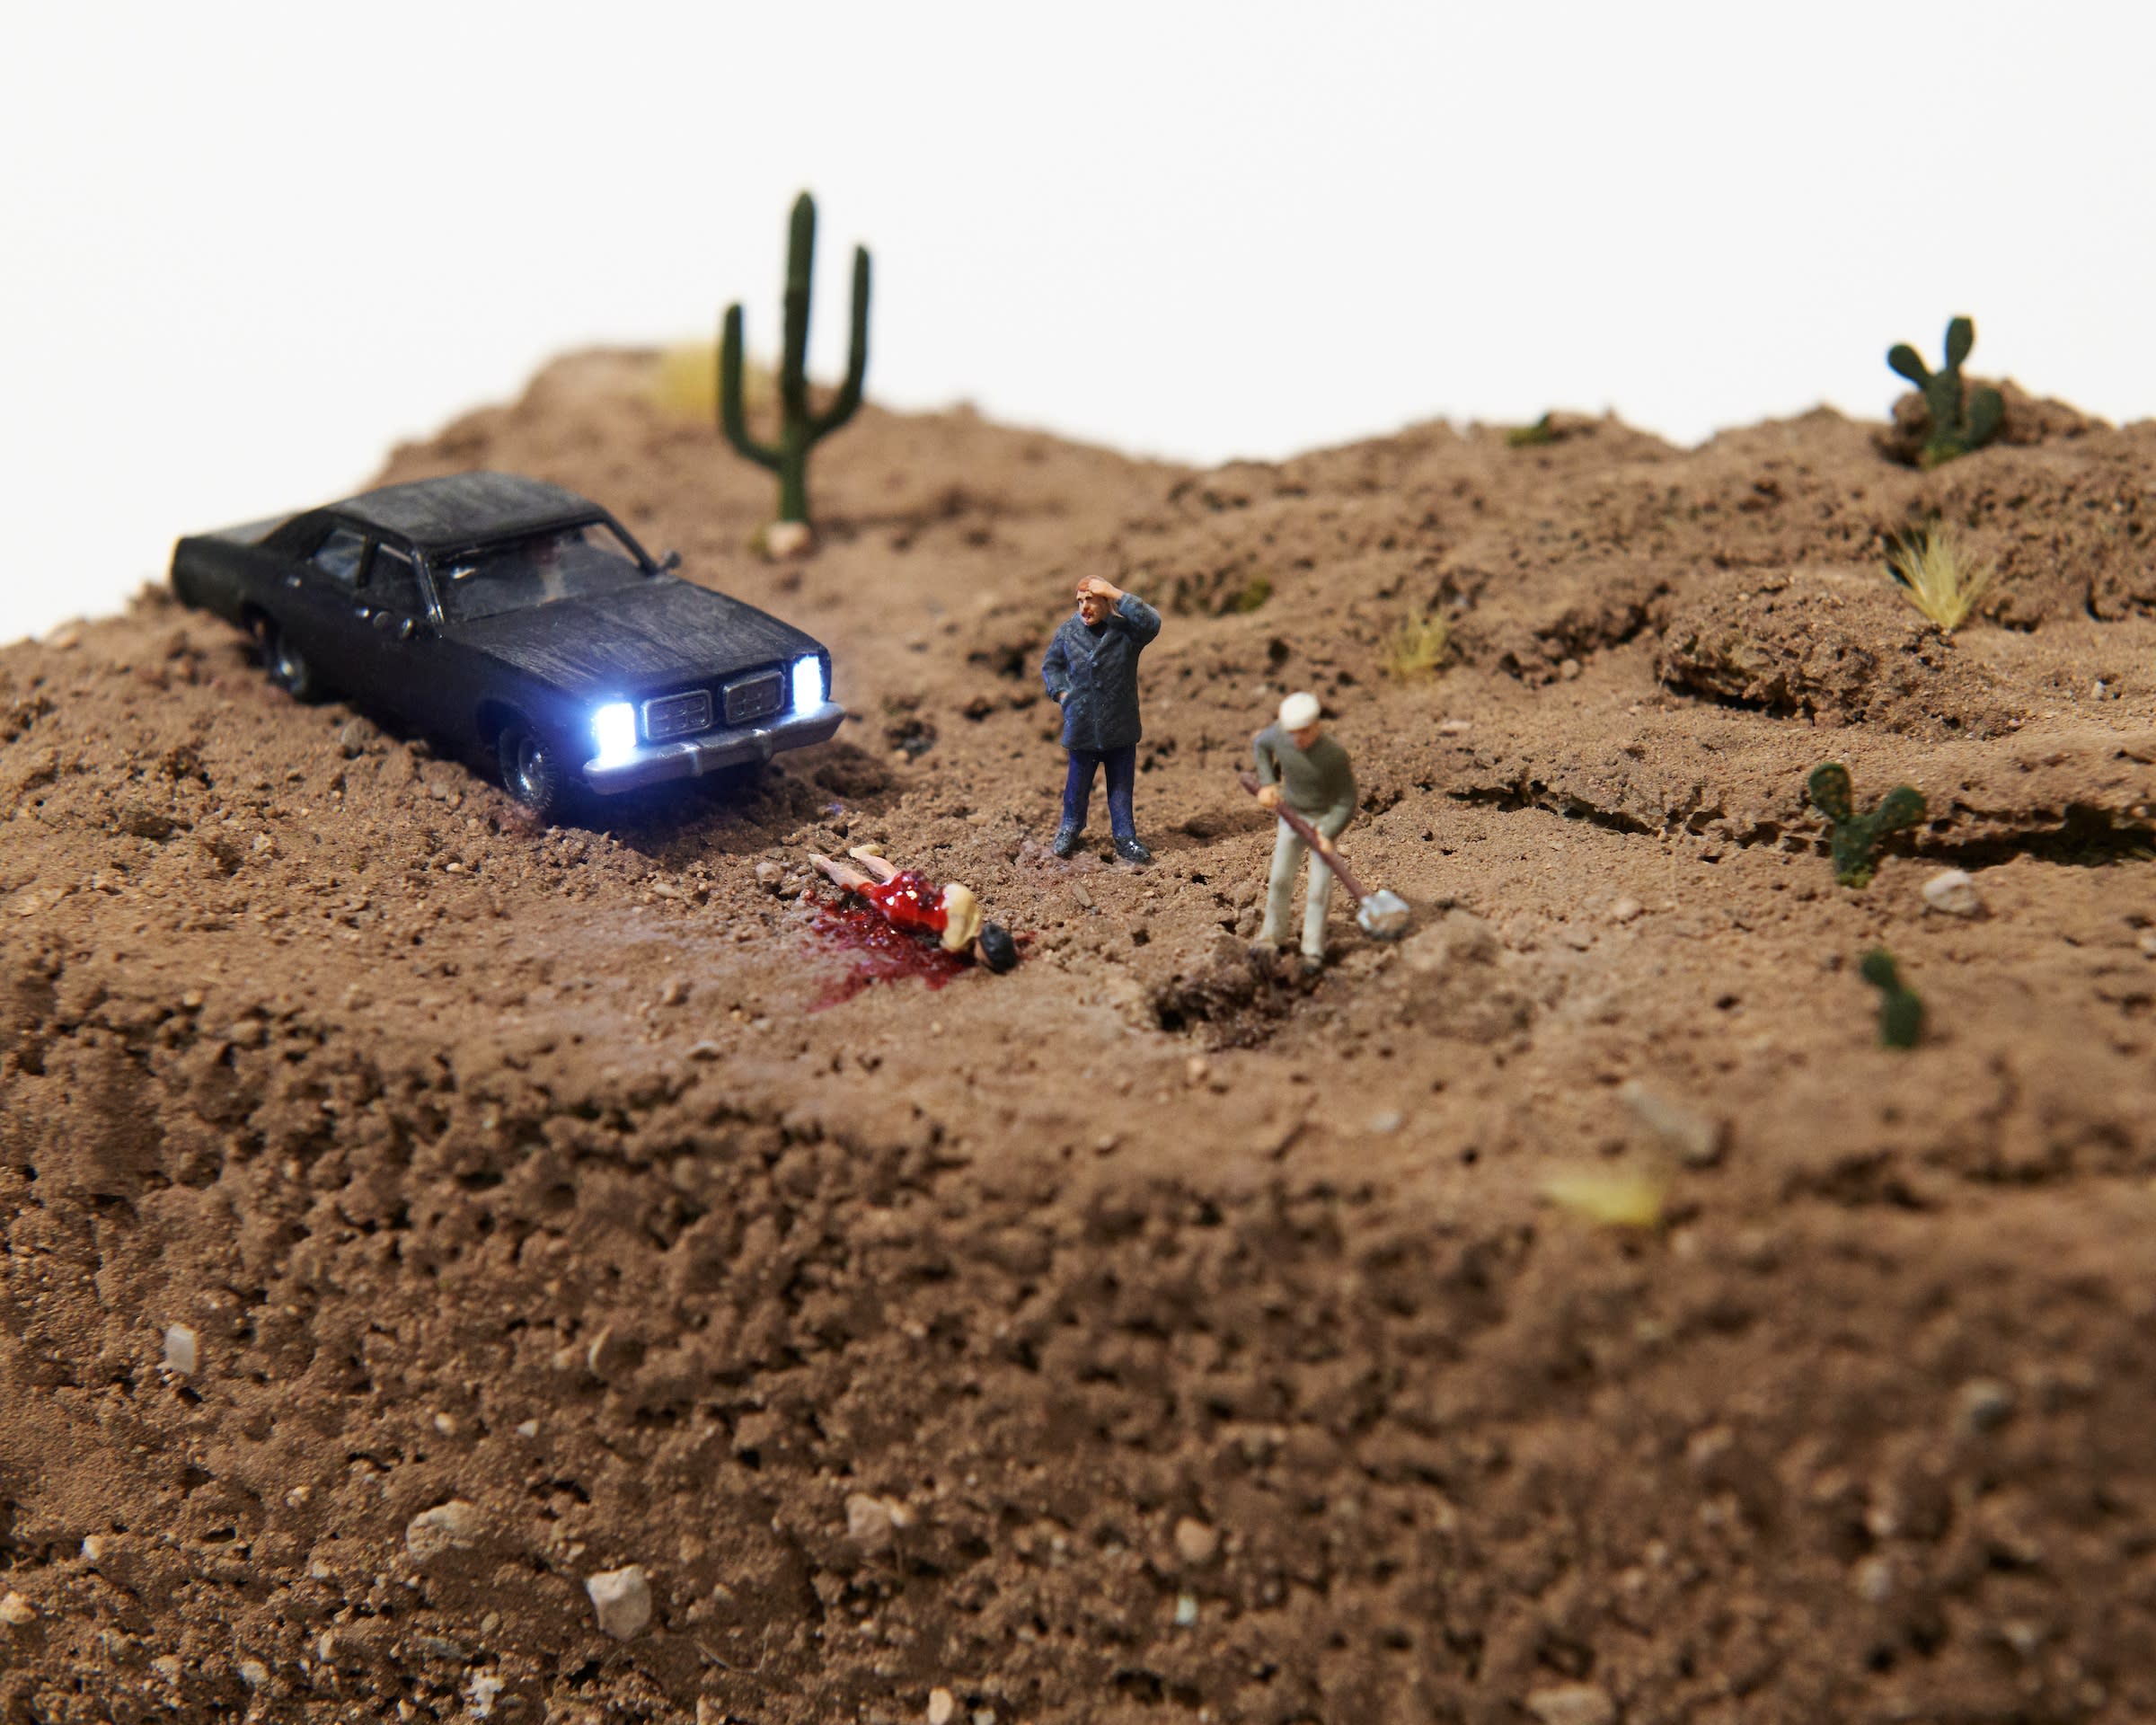 Abigail Goldman's sculpture of a desert murder scene